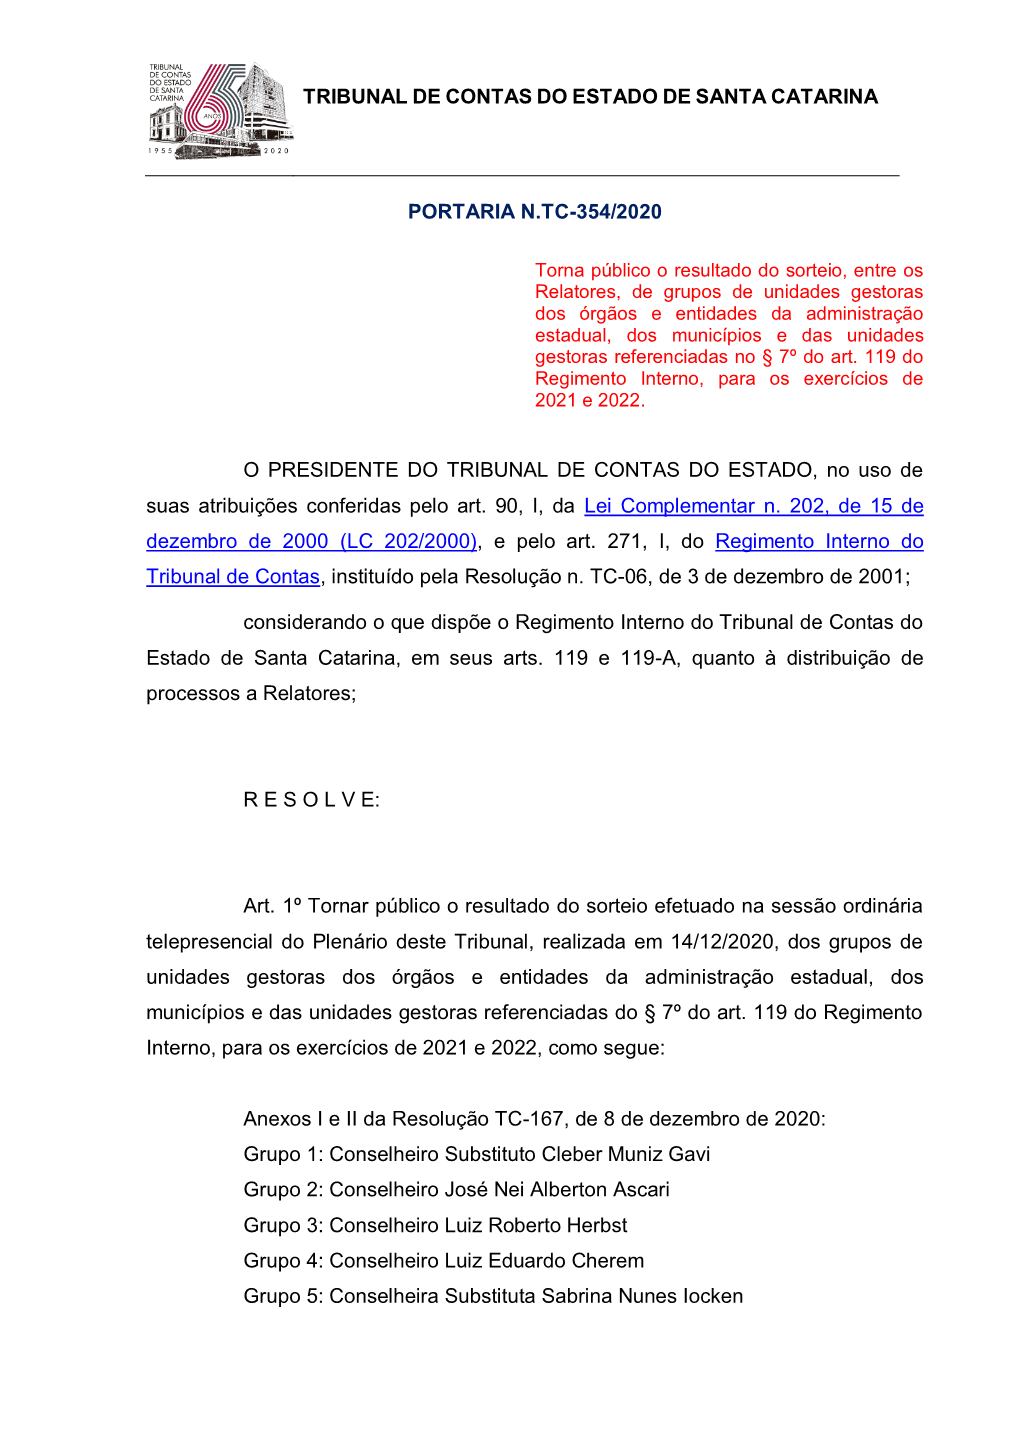 PORTARIA N.TC 354-2020 CONSOLIDADA.Pdf